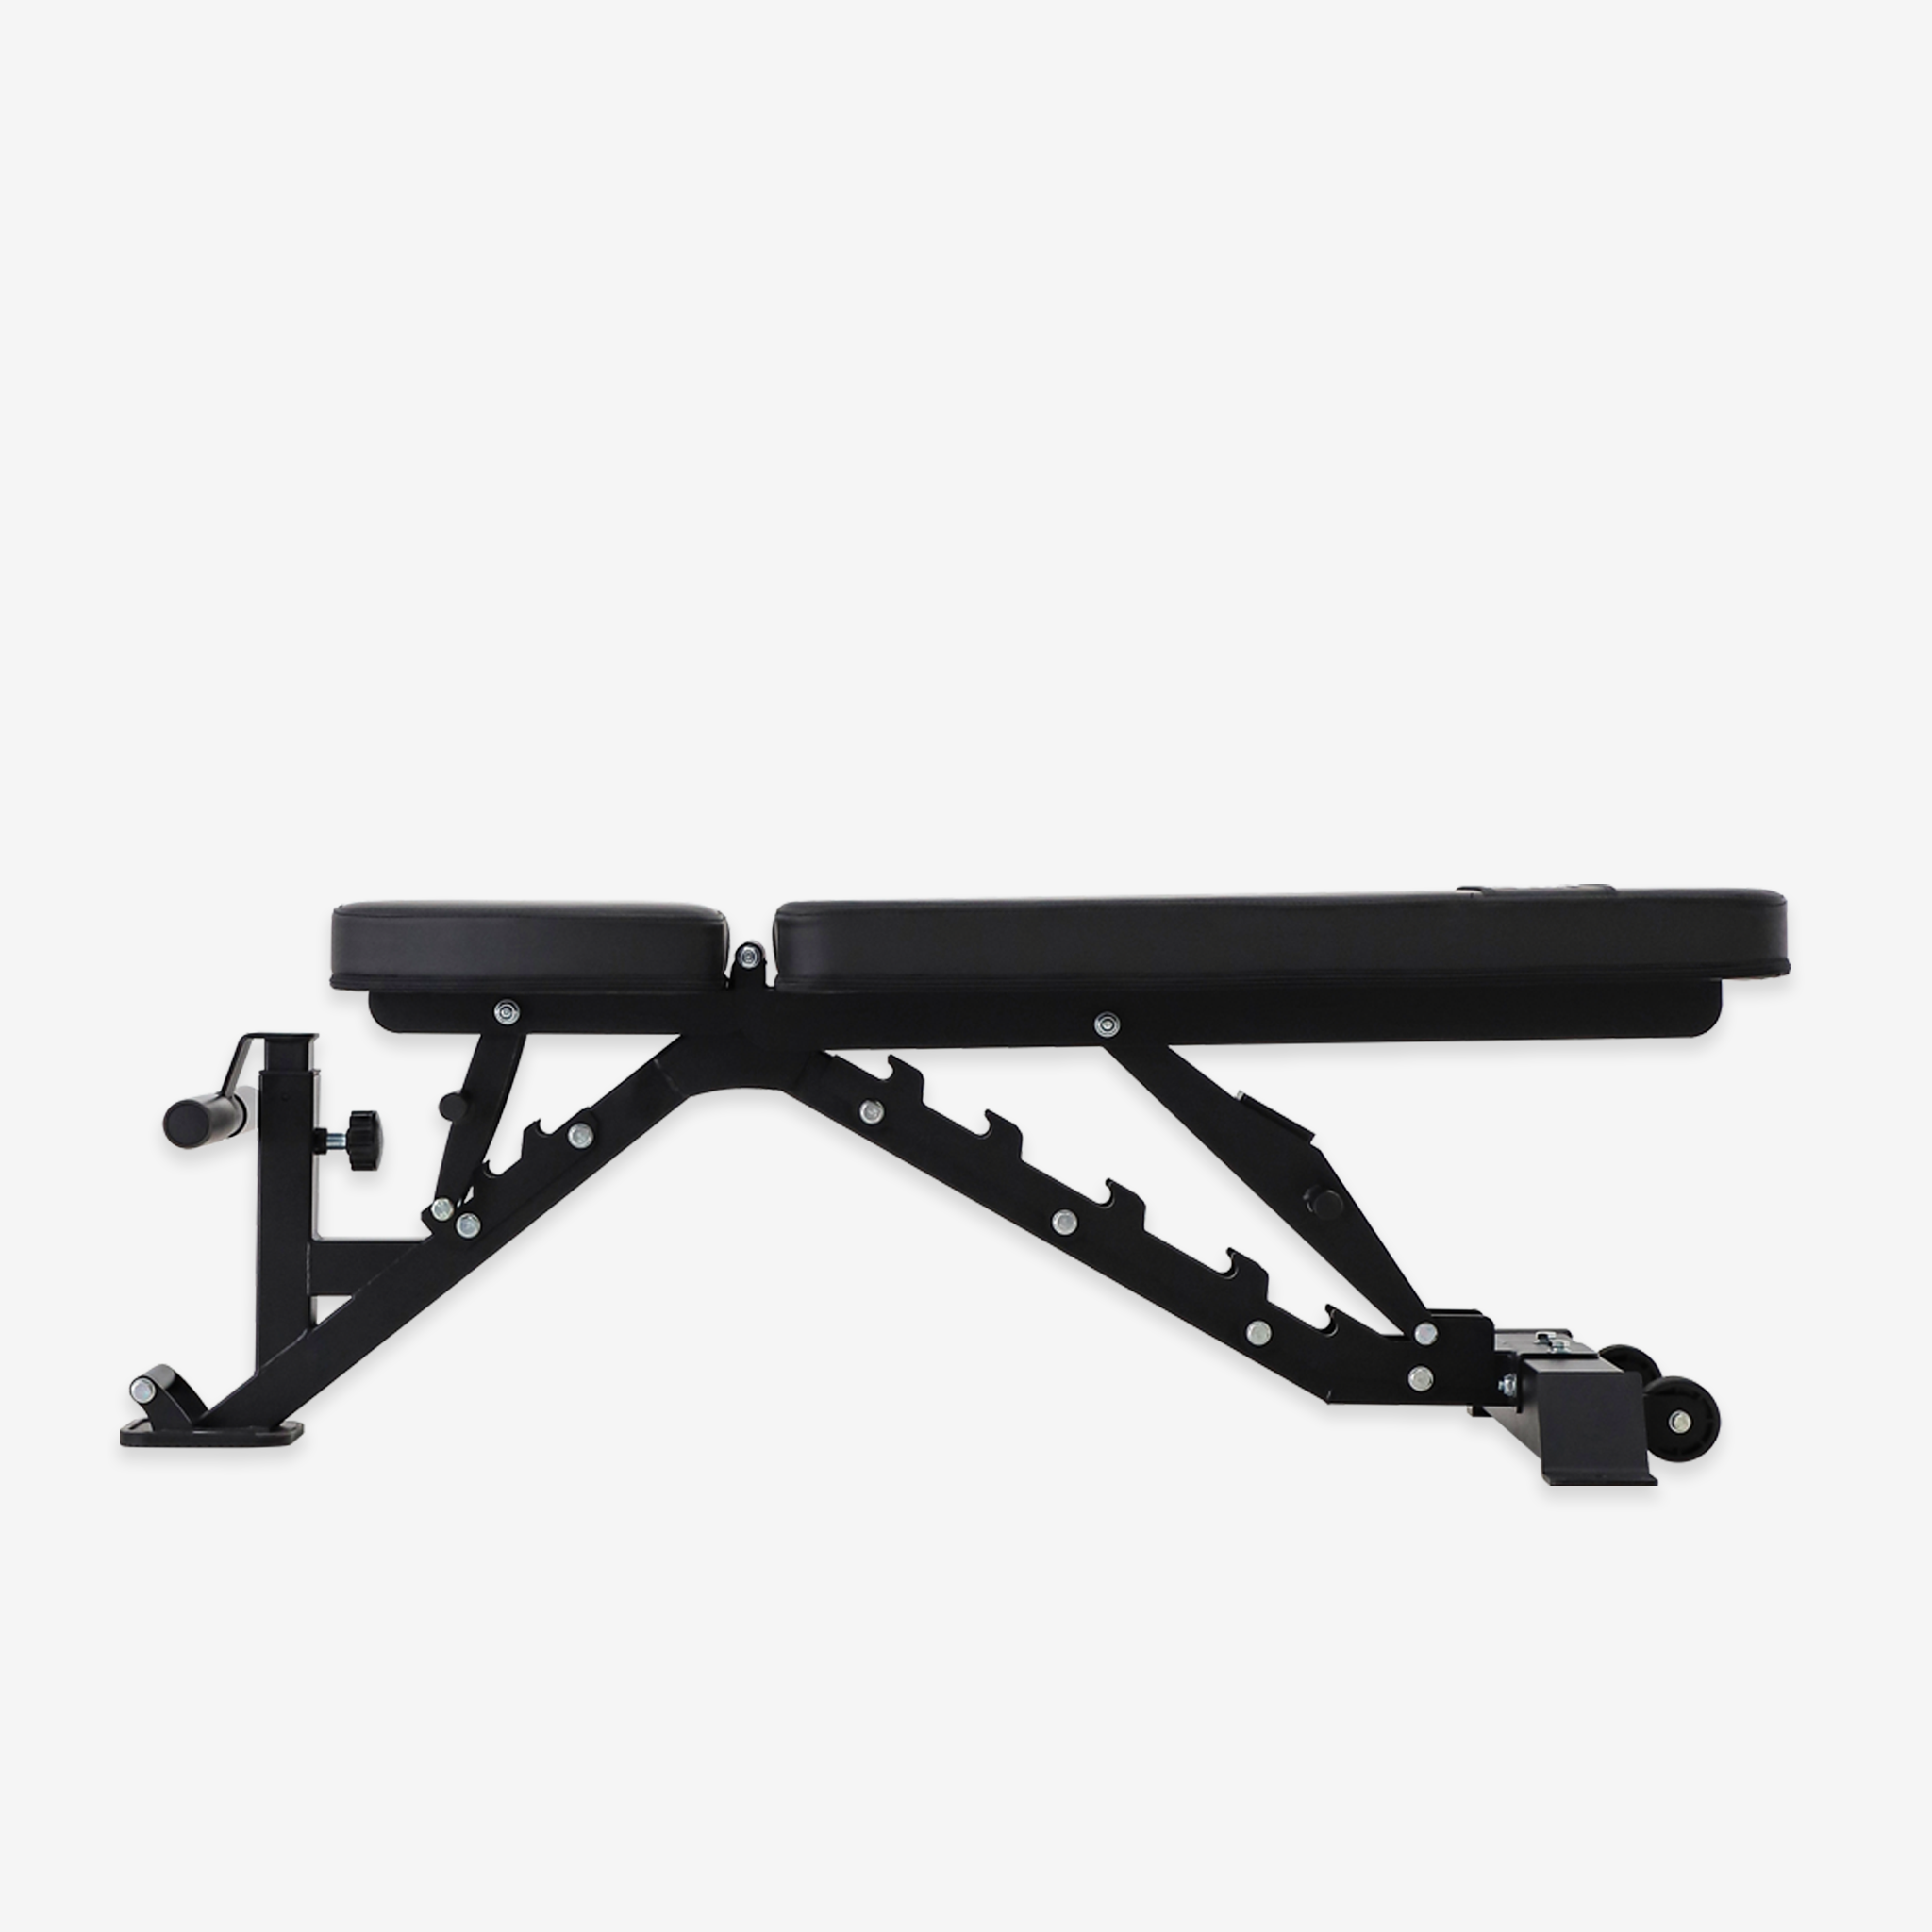 Altas Strength Home Gym Equipment Multi-functional Bench AL-4026（Pre-Order）